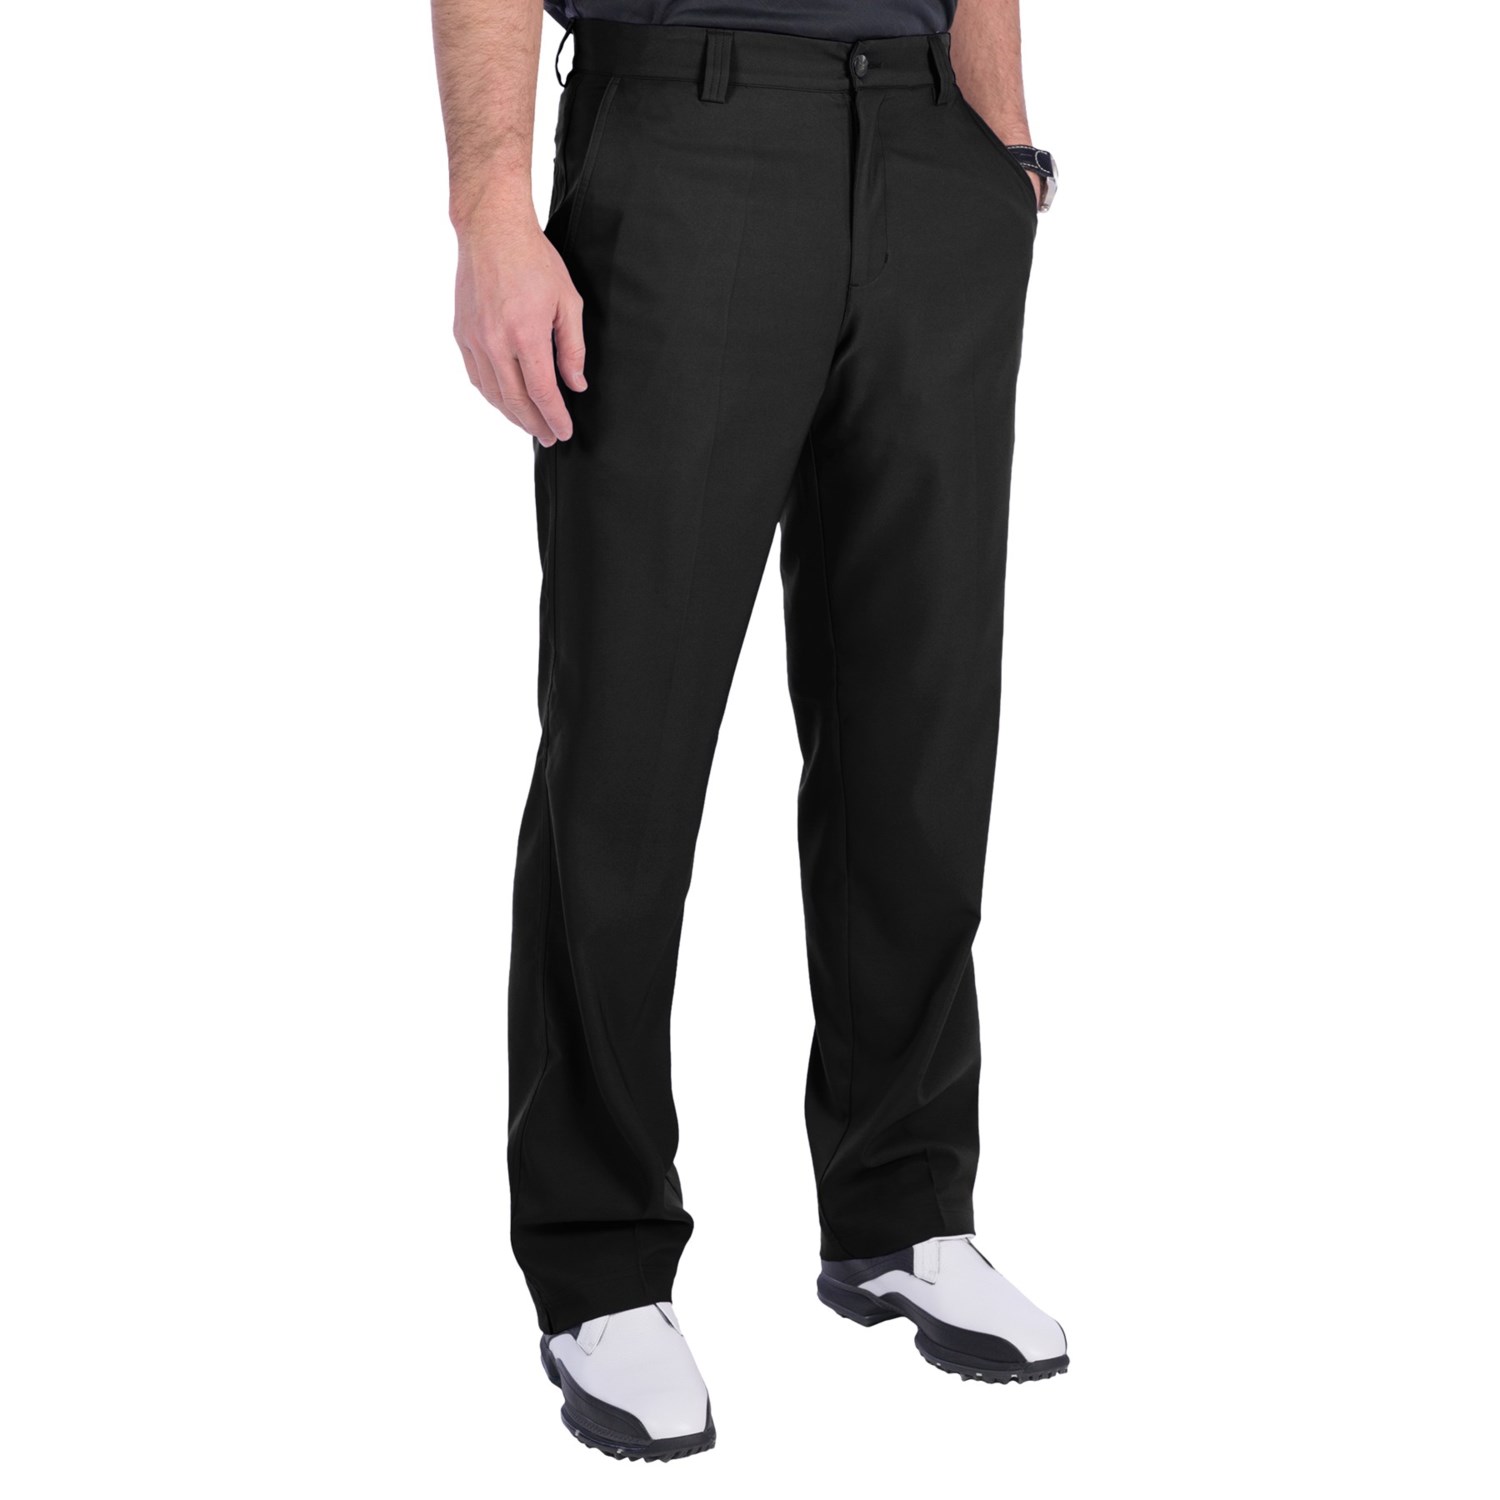 Adidas Golf Climalite® Pants (For Men) 6644K - Save 73%